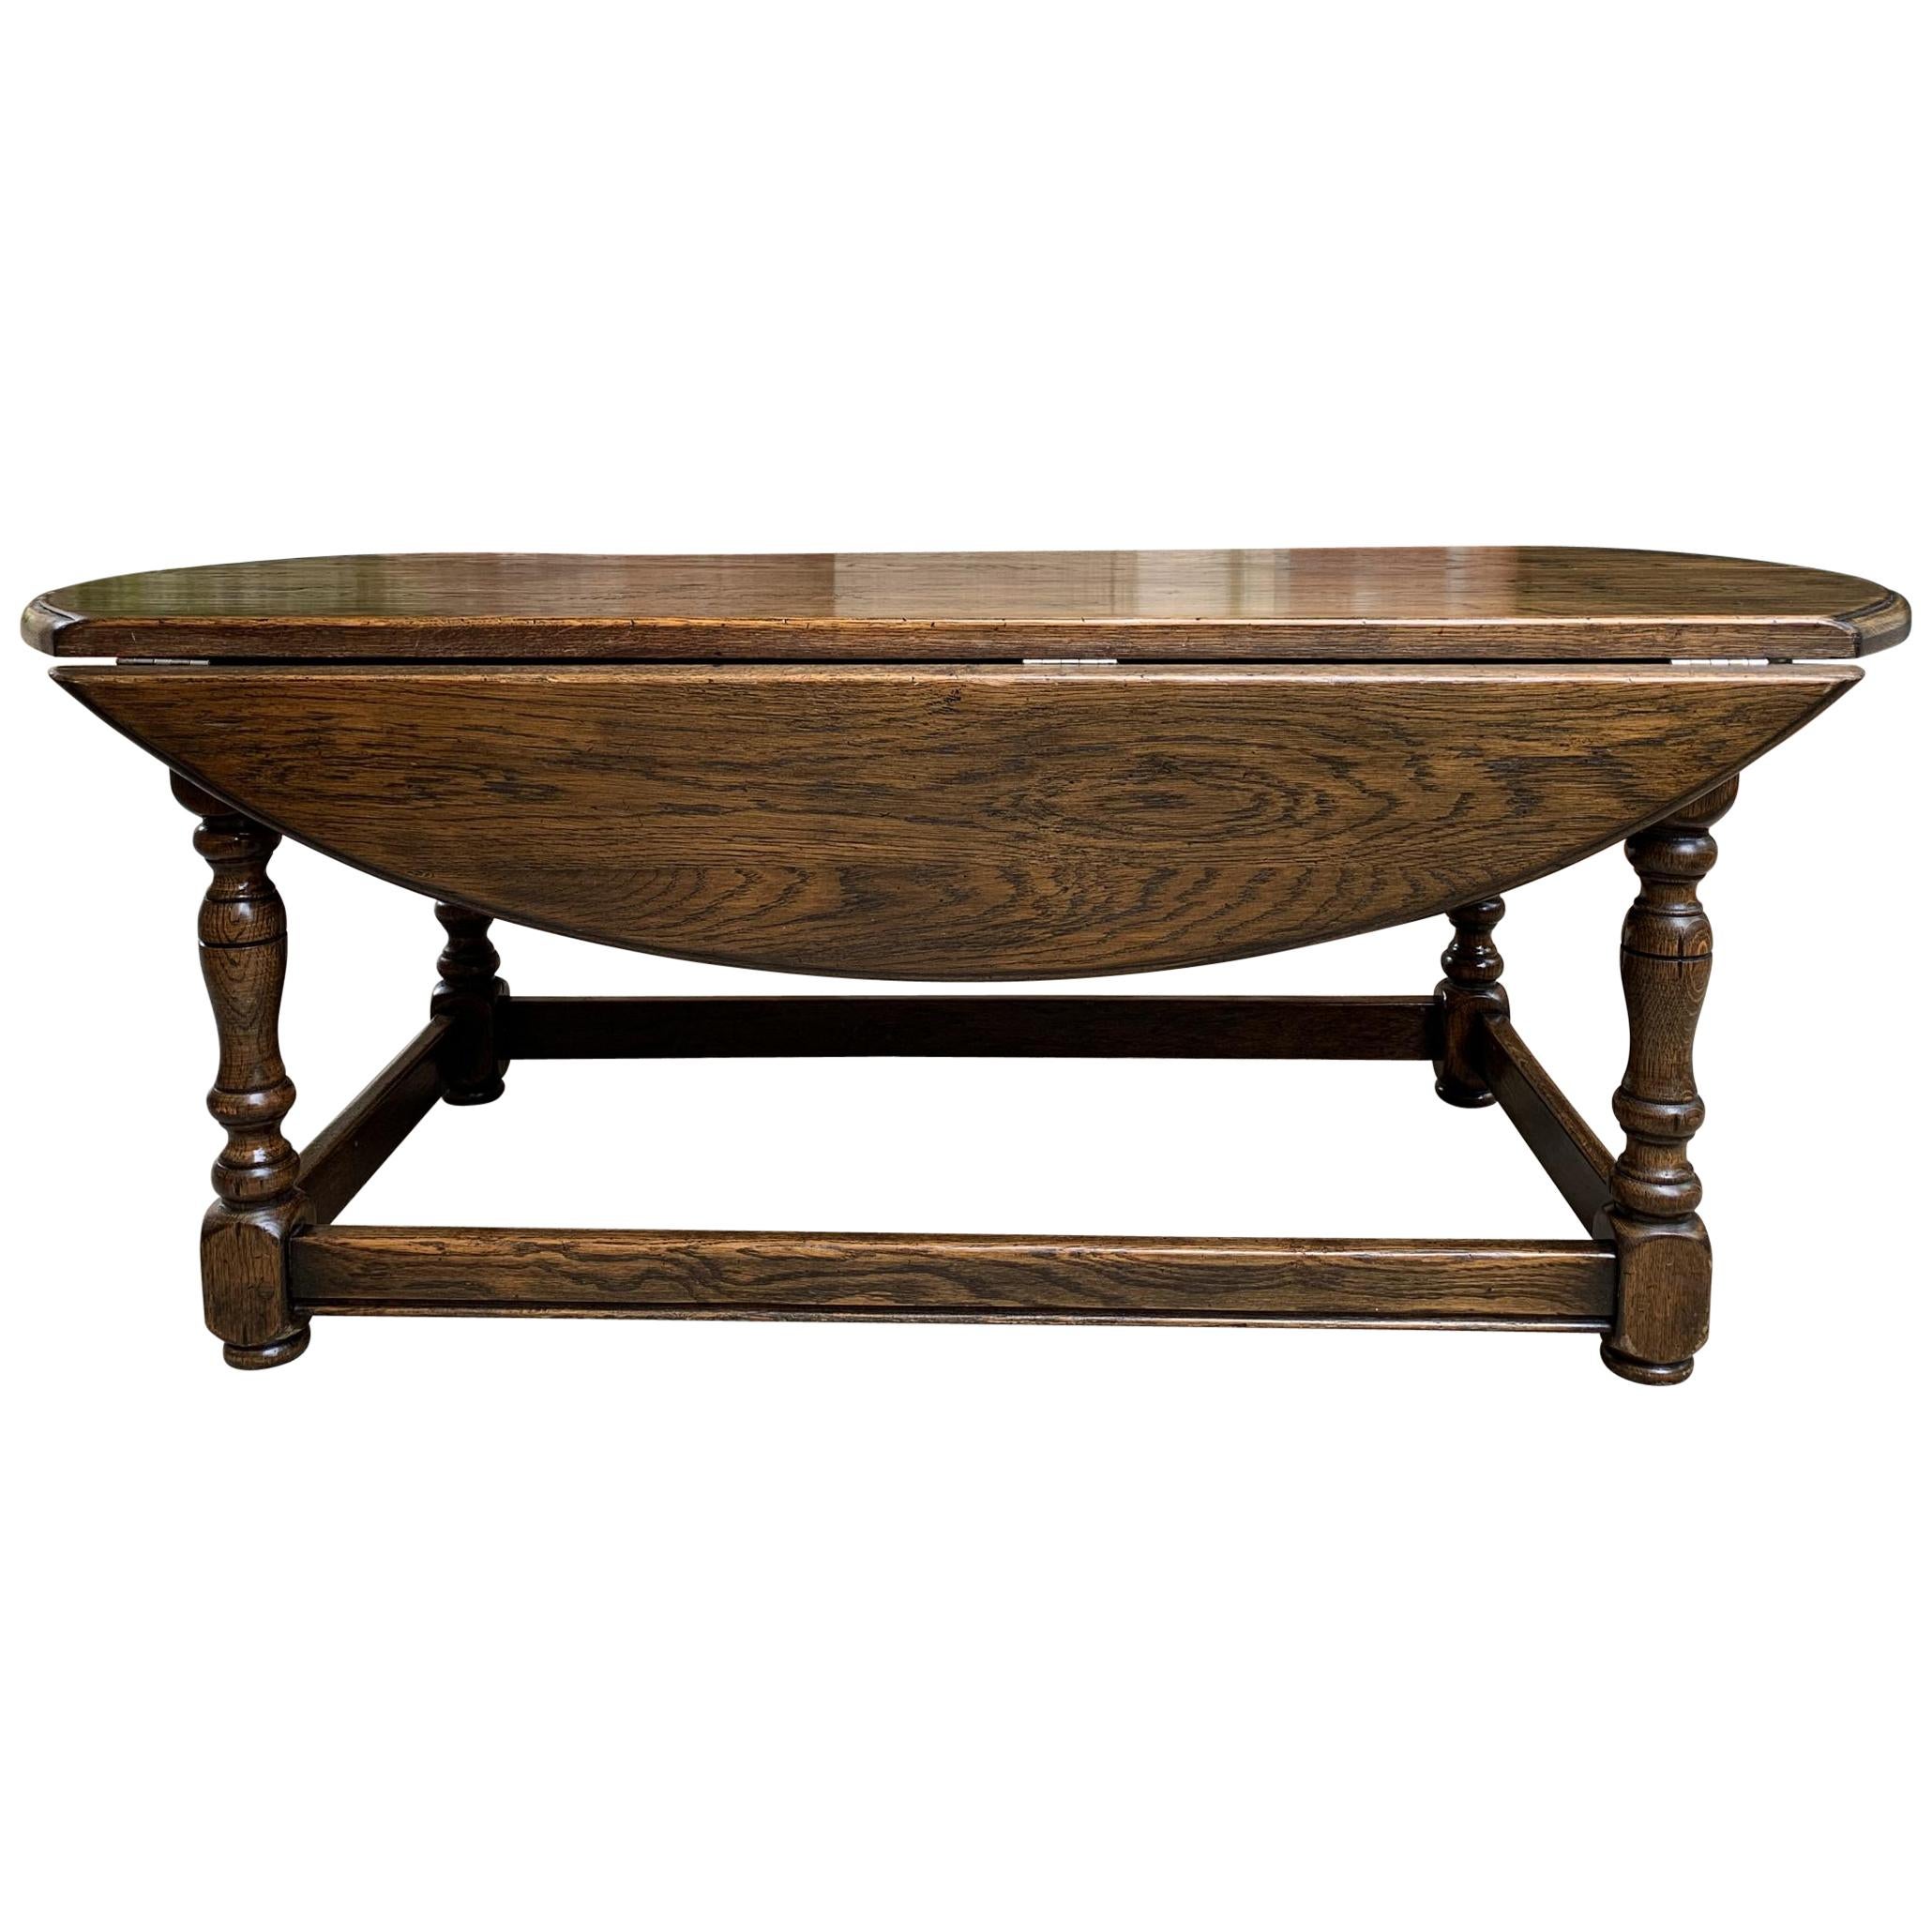 Vintage English Coffee Table Slender Drop-Leaf Jacobean Wake Table Style Oval